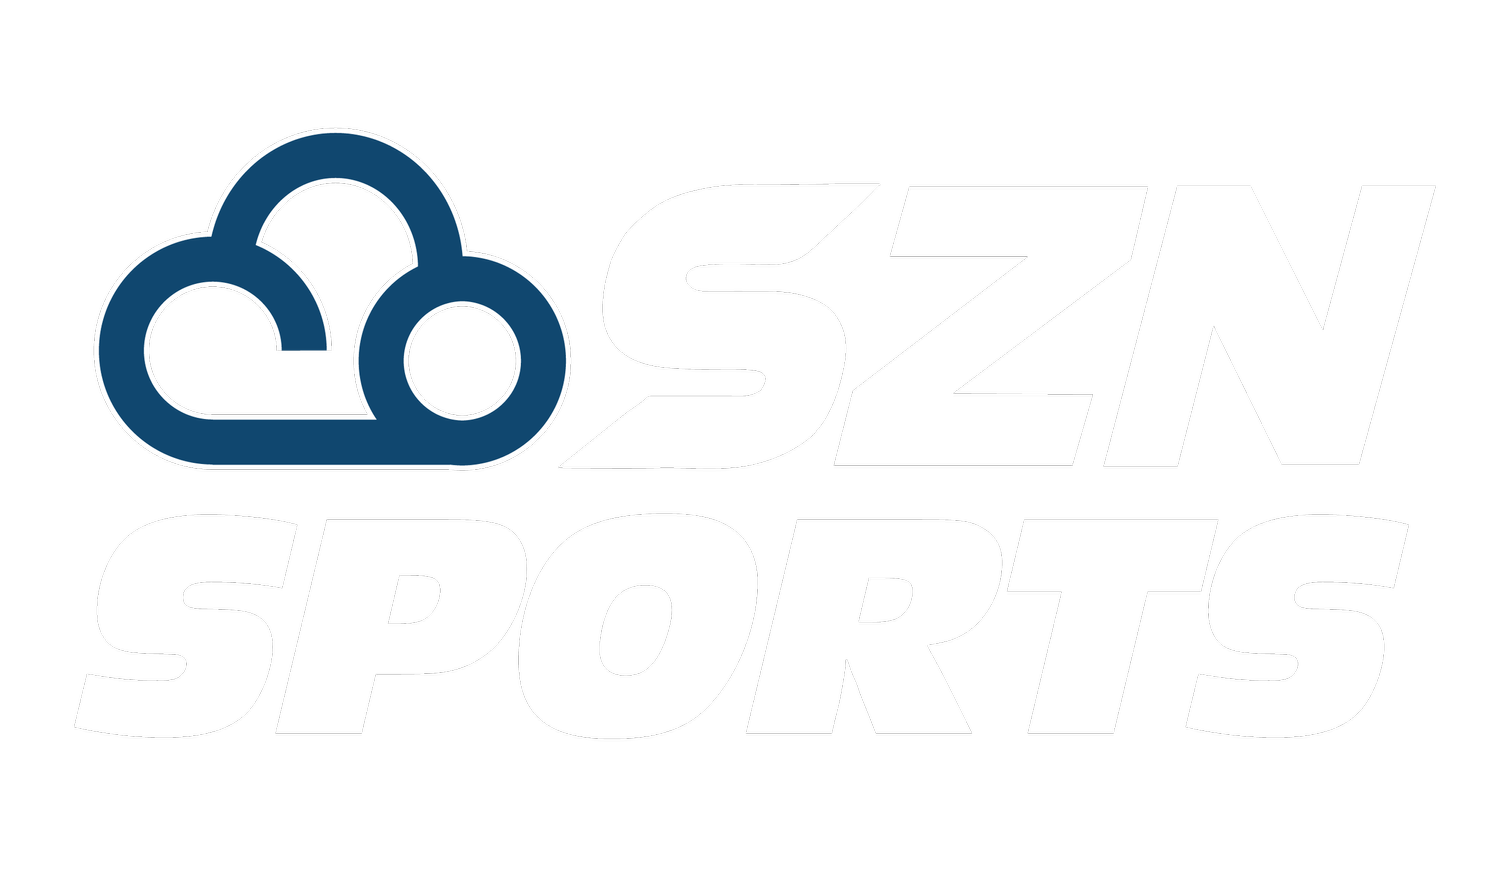 Seazon Sports